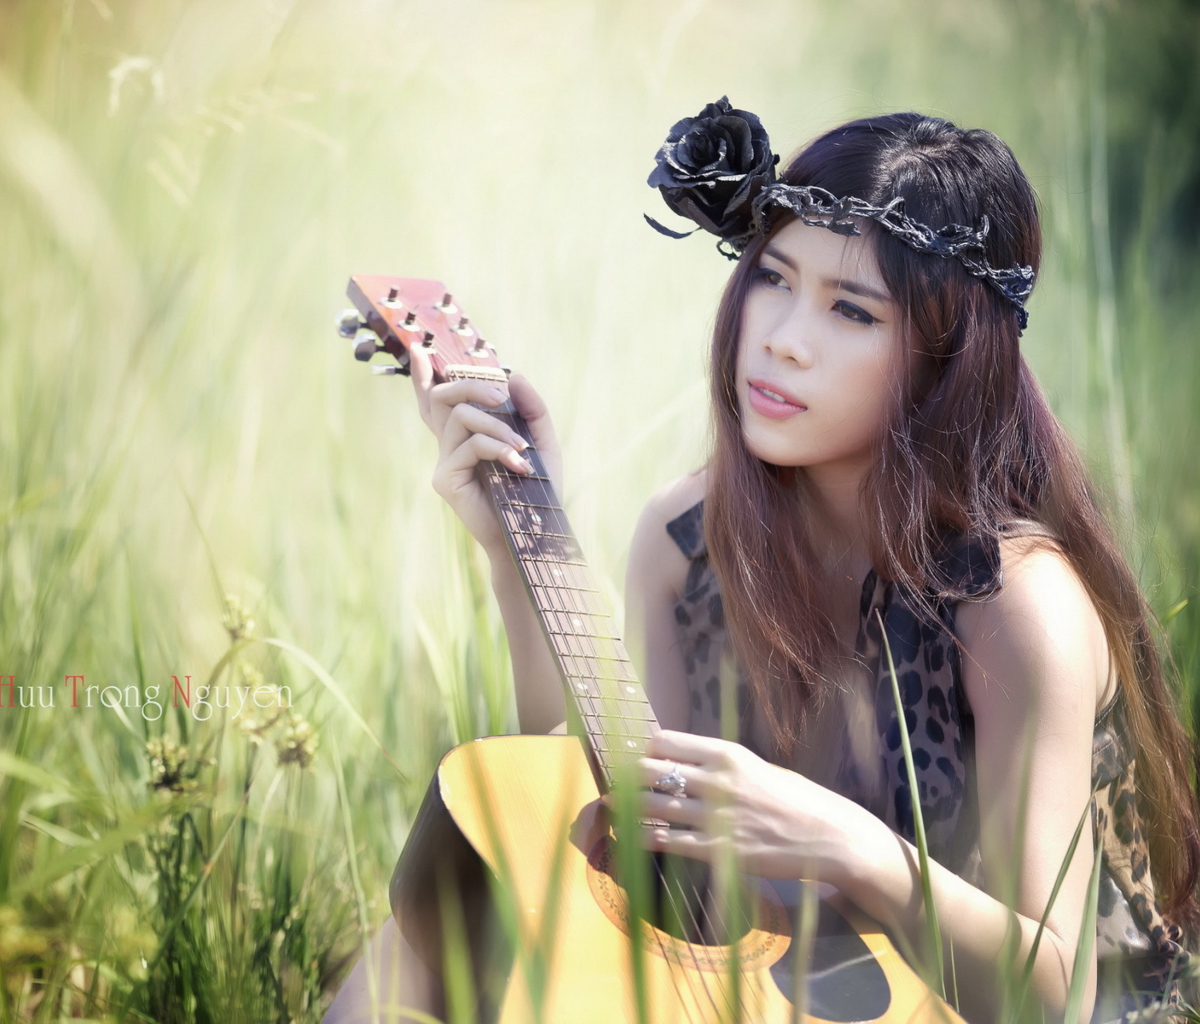 Das Pretty Girl In Grass Playing Guitar Wallpaper 1200x1024